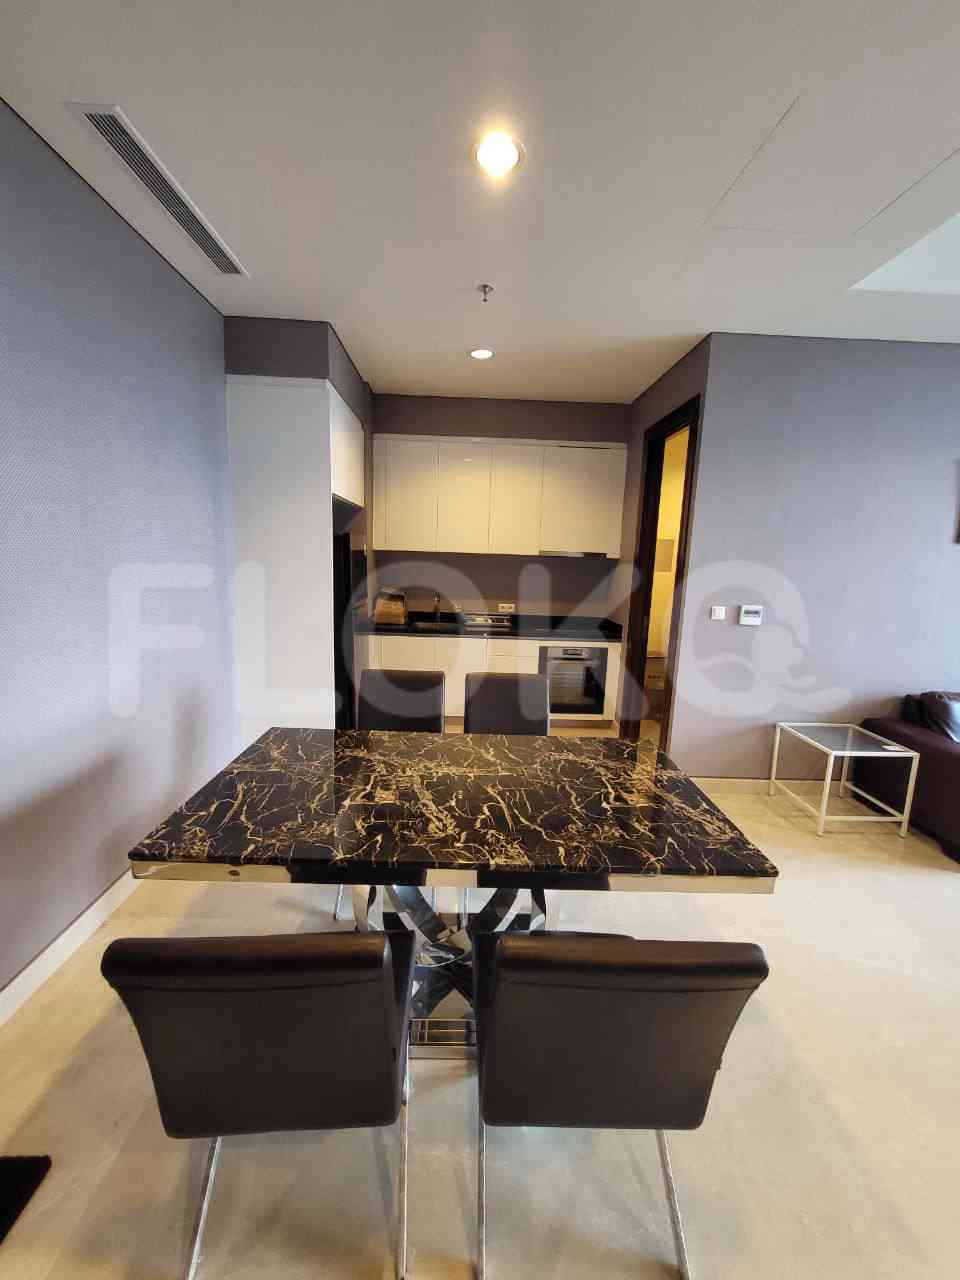 2 Bedroom on 16th Floor for Rent in The Elements Kuningan Apartment - fku479 1